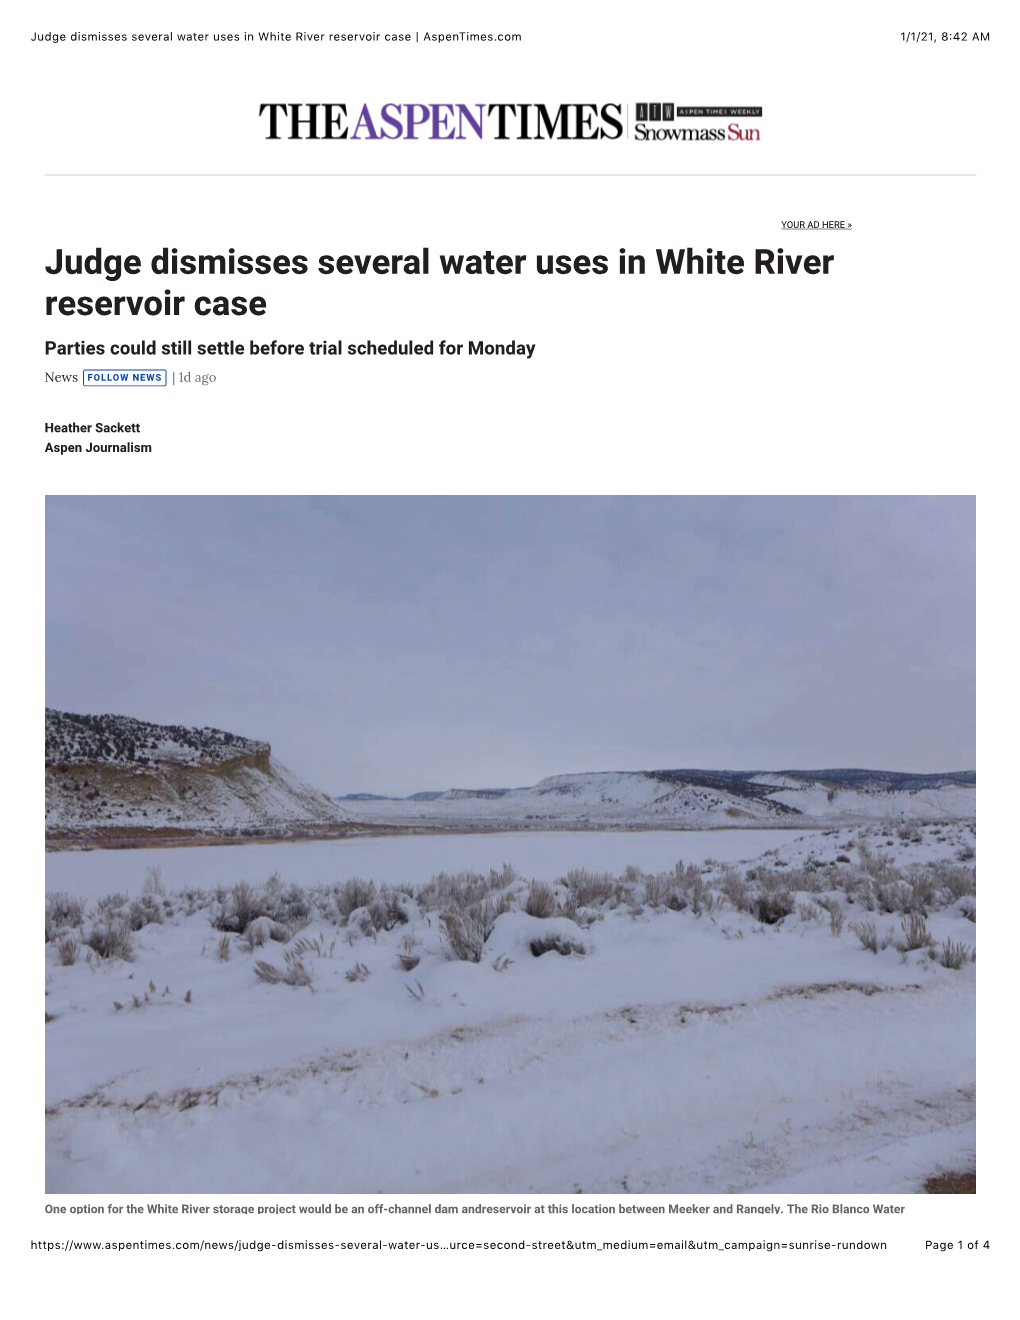 Judge Dismisses Several Water Uses in White River Reservoir Case | Aspentimes.Com 1/1/21, 8�42 AM